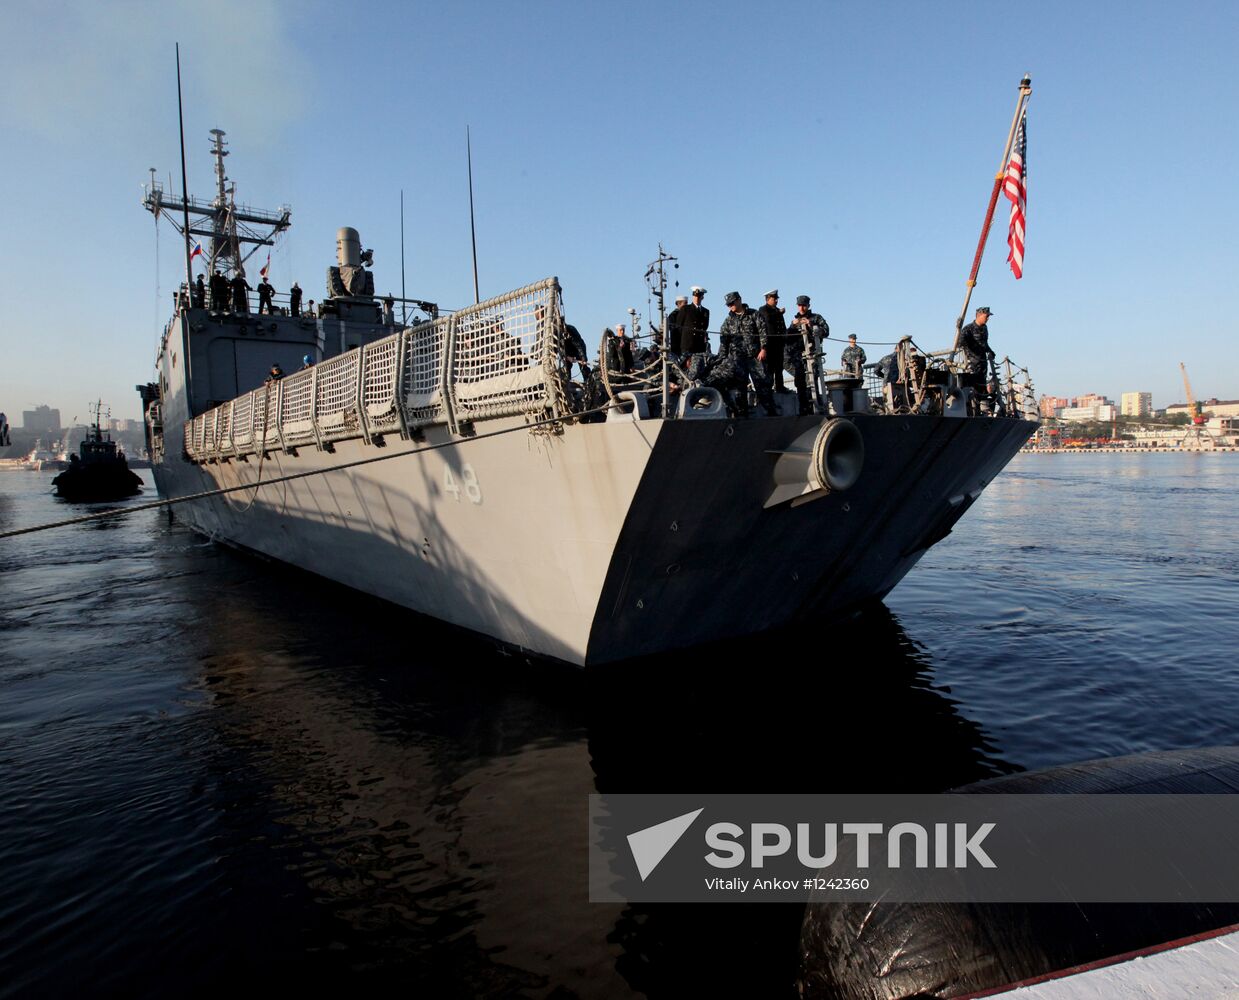 Guided-missile frigate USS Vandegrift calls at Vladivostok